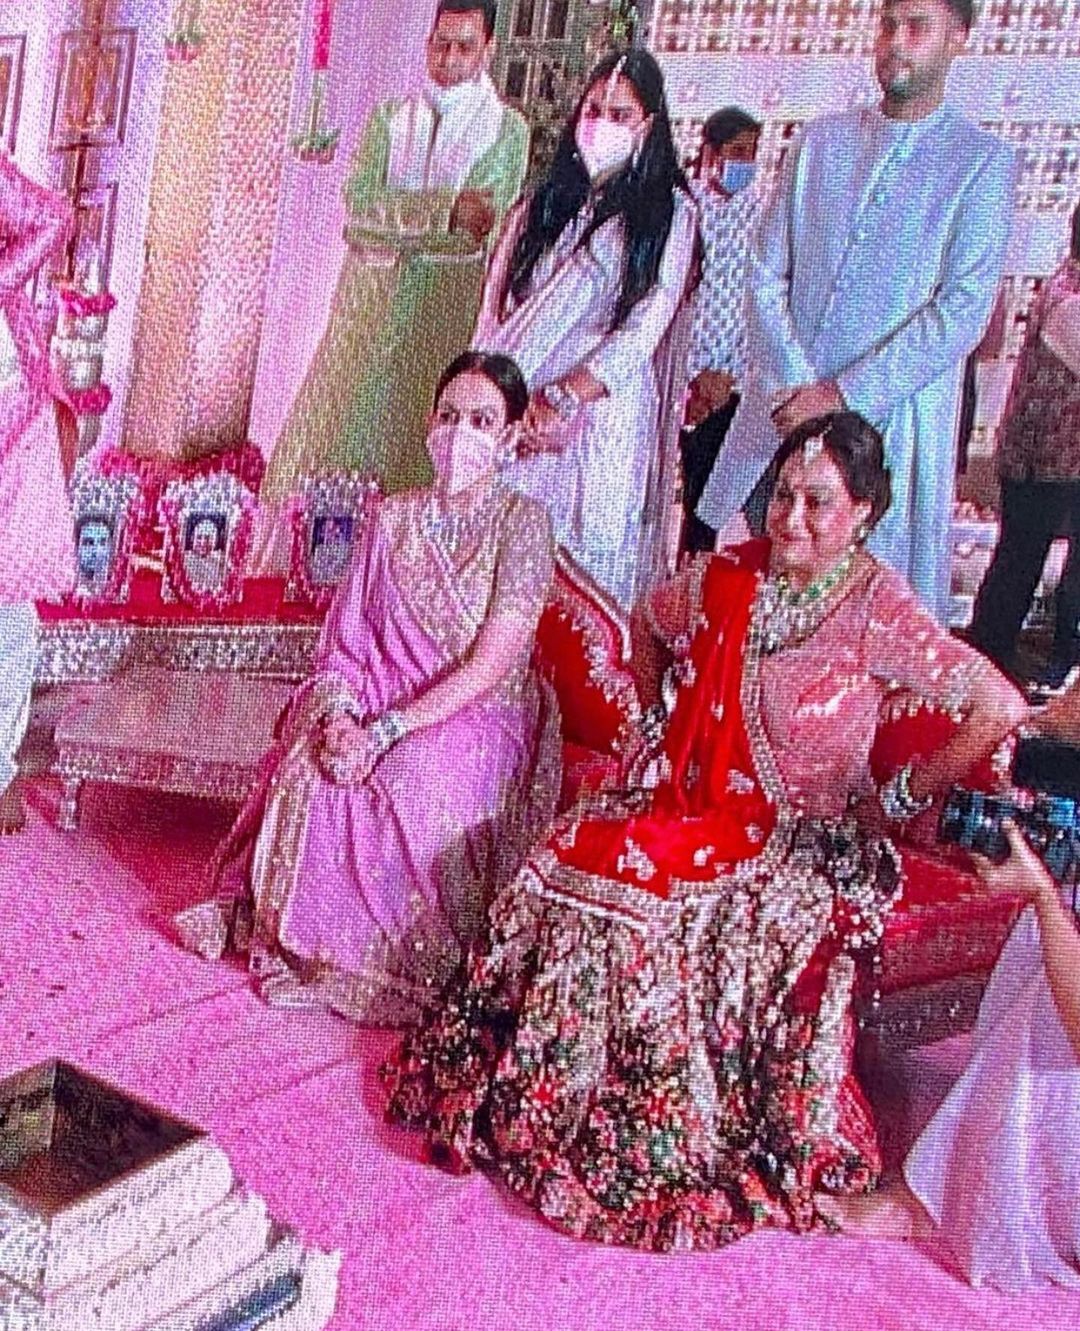 Anmol Ambani And Khrisha Shah Wedding Photo